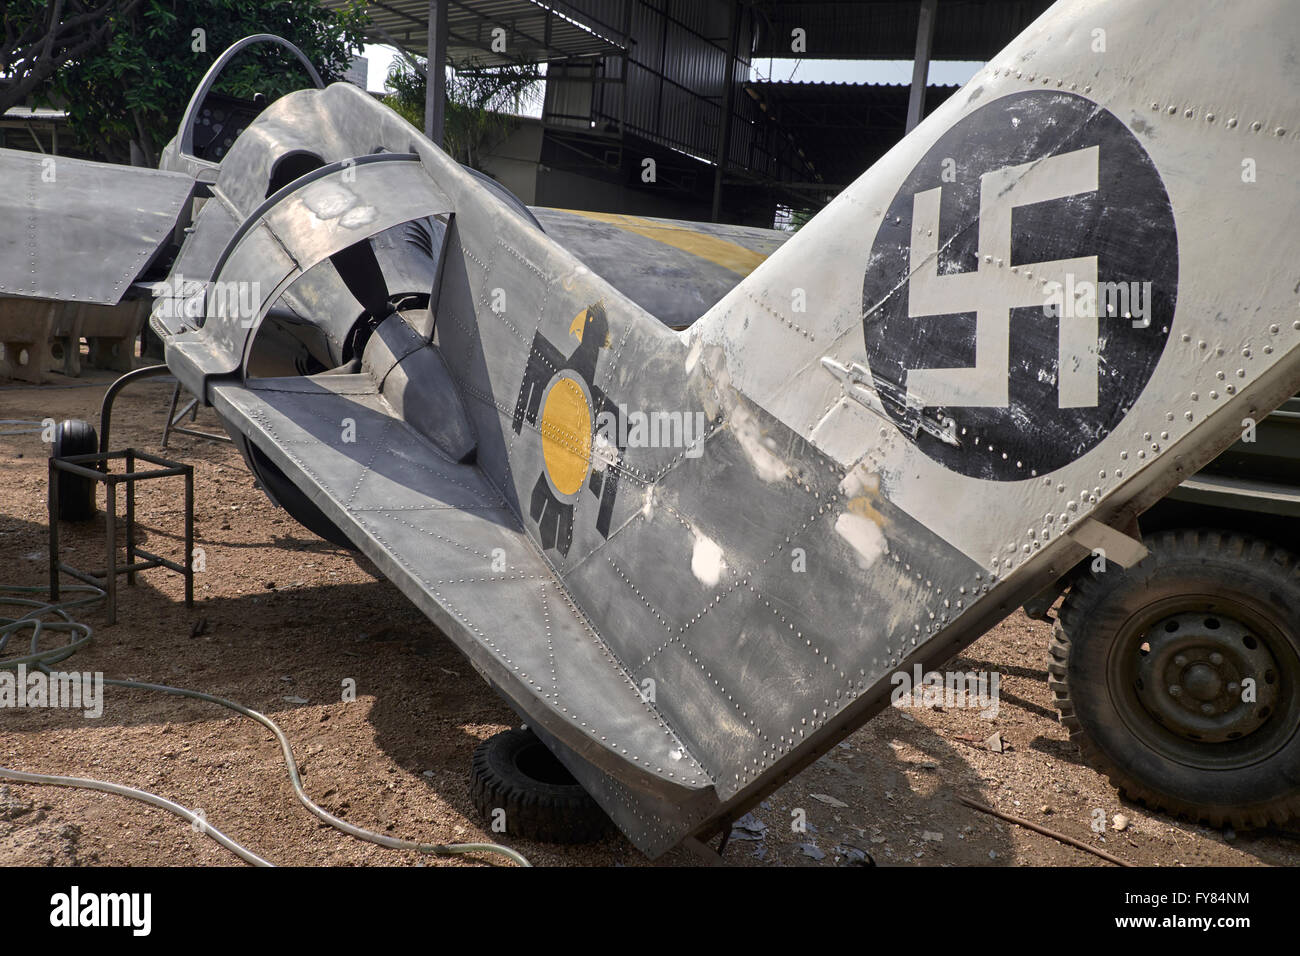 German World War 2 military aircraft undergoing restoration Stock Photo